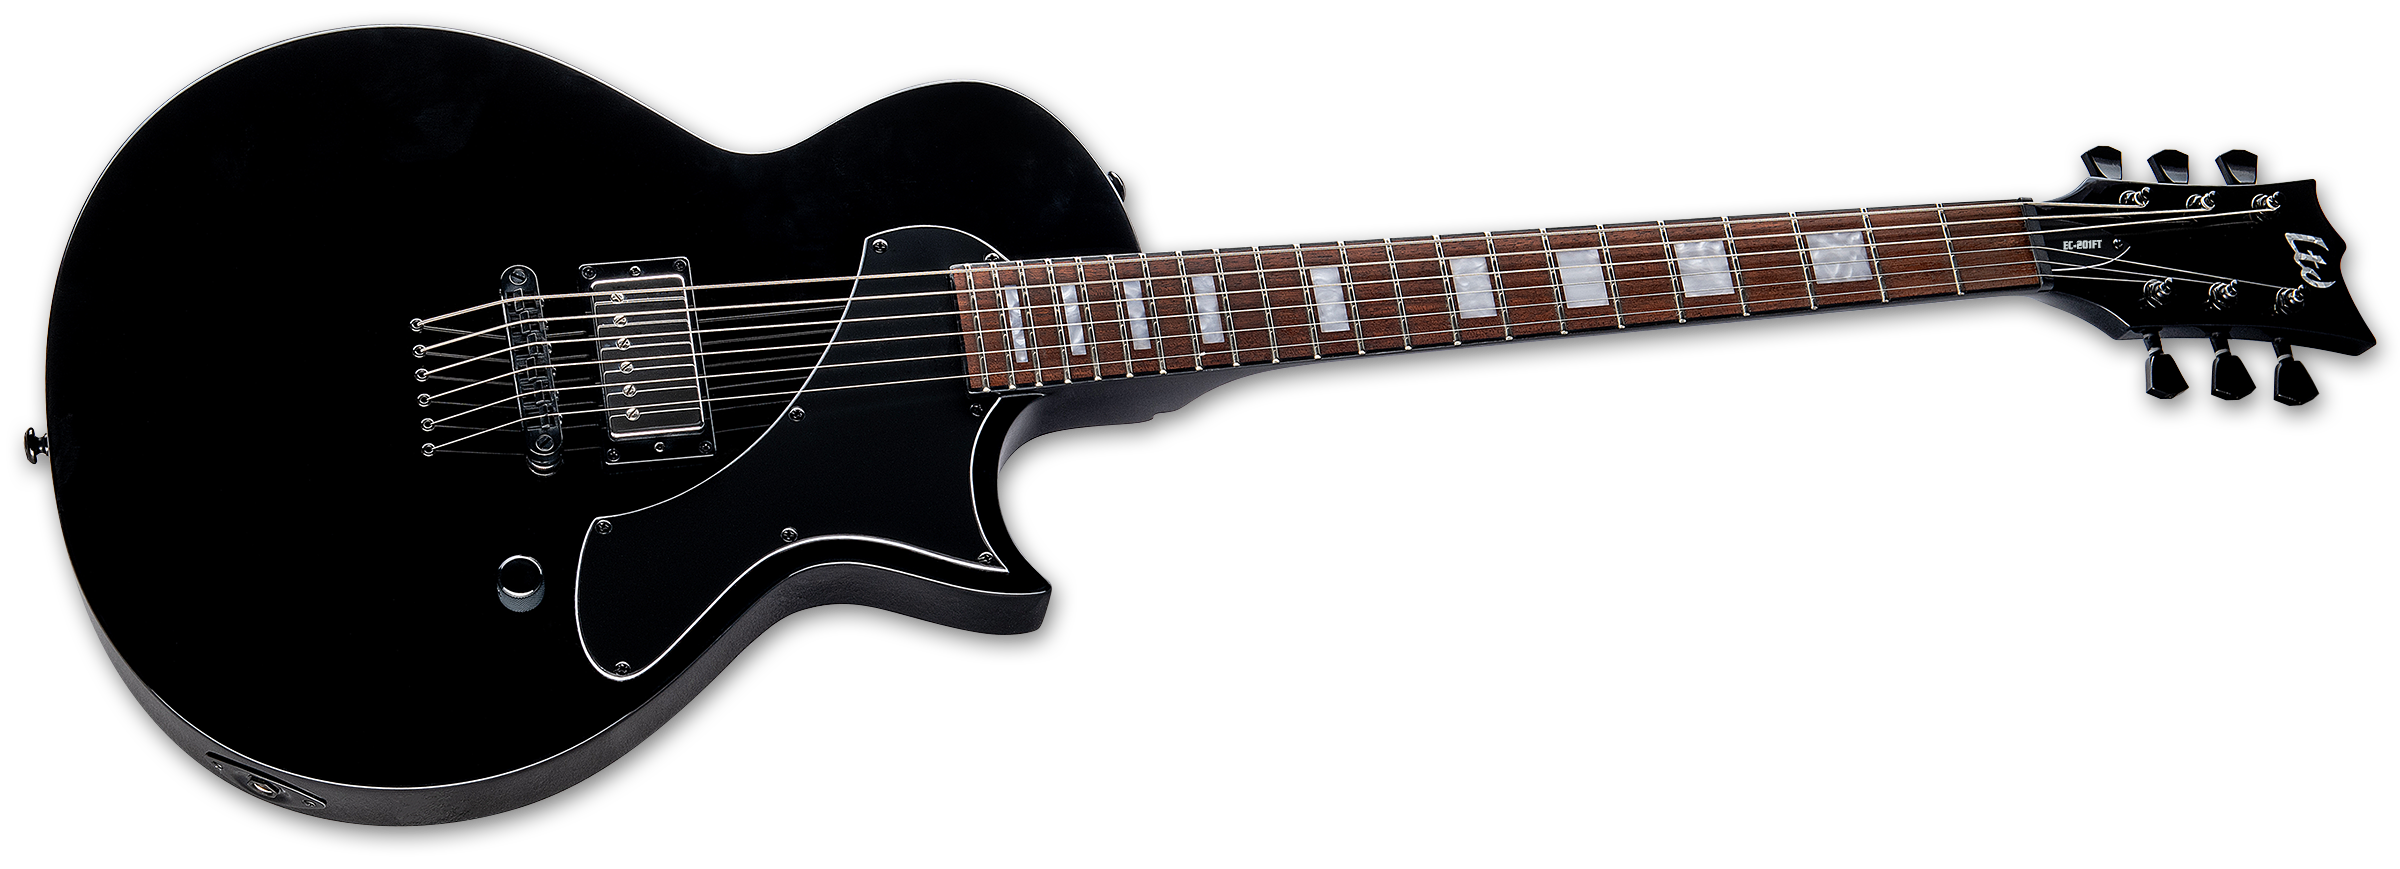 Ltd Ec-201 1h Ht Jat - Black - Metal electric guitar - Variation 2